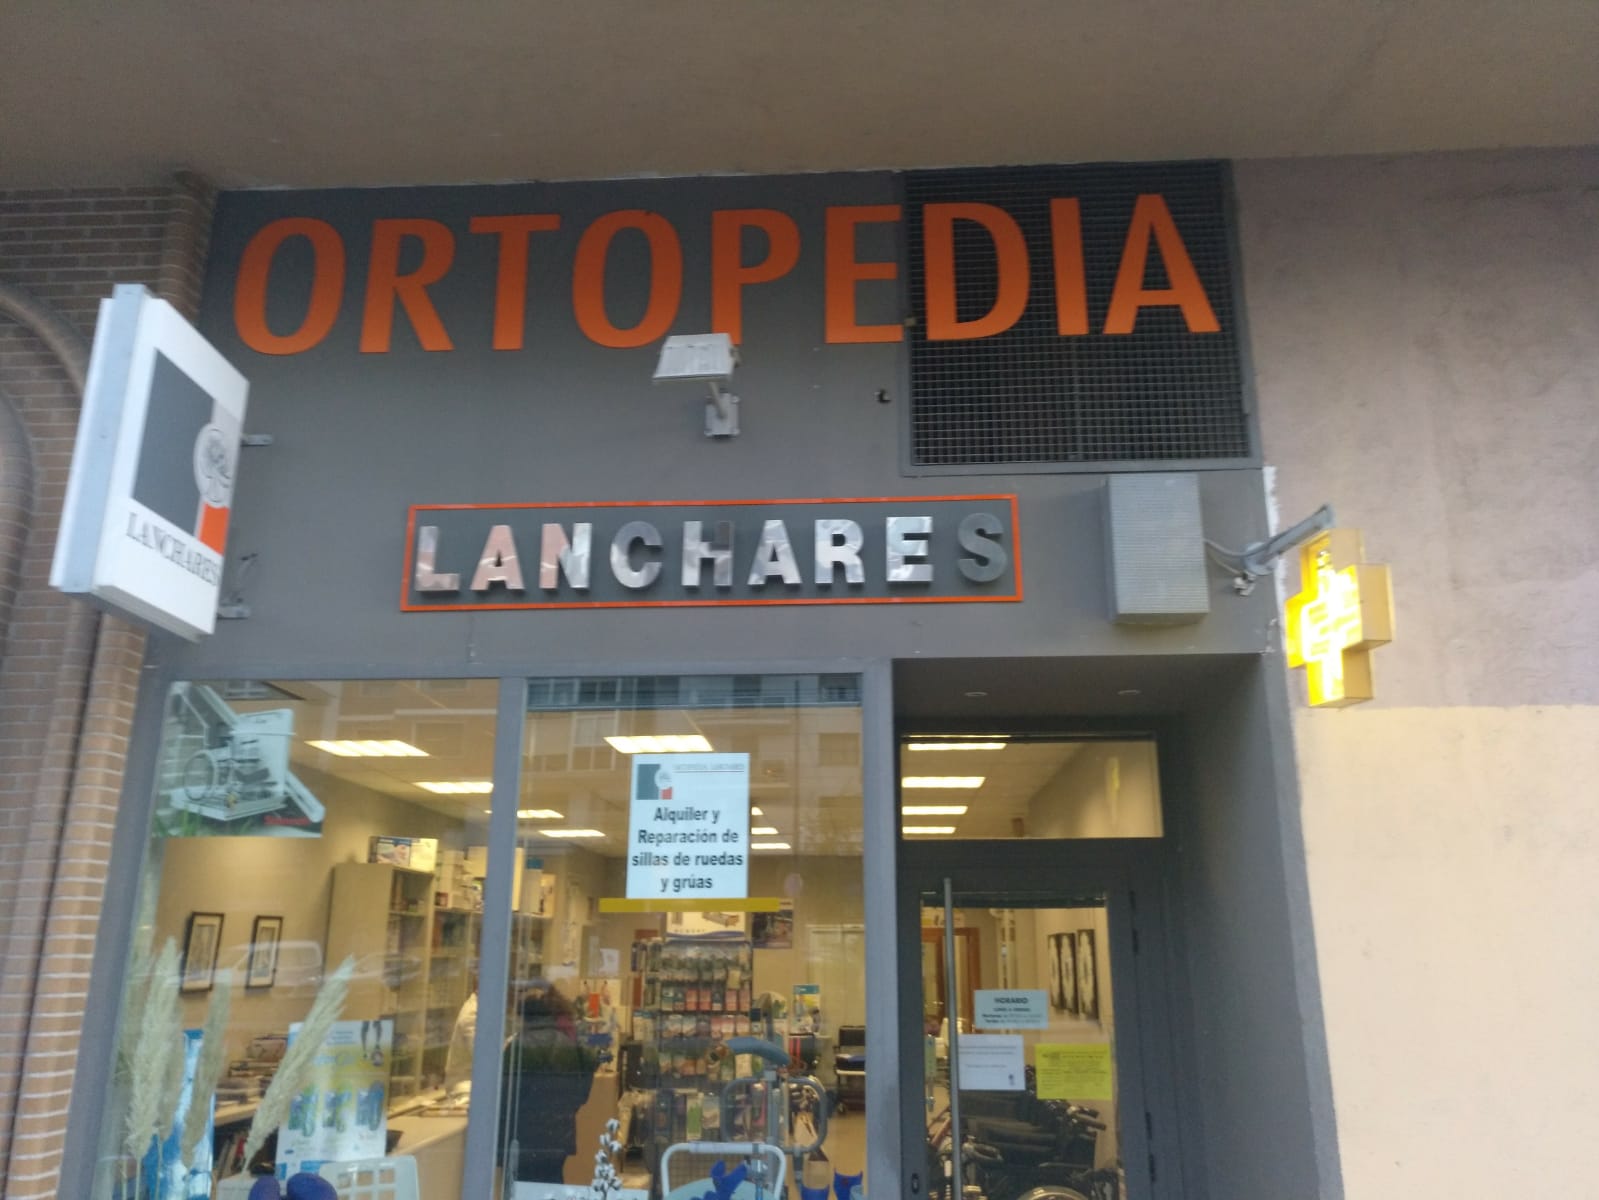 Ortopedia Lanchares